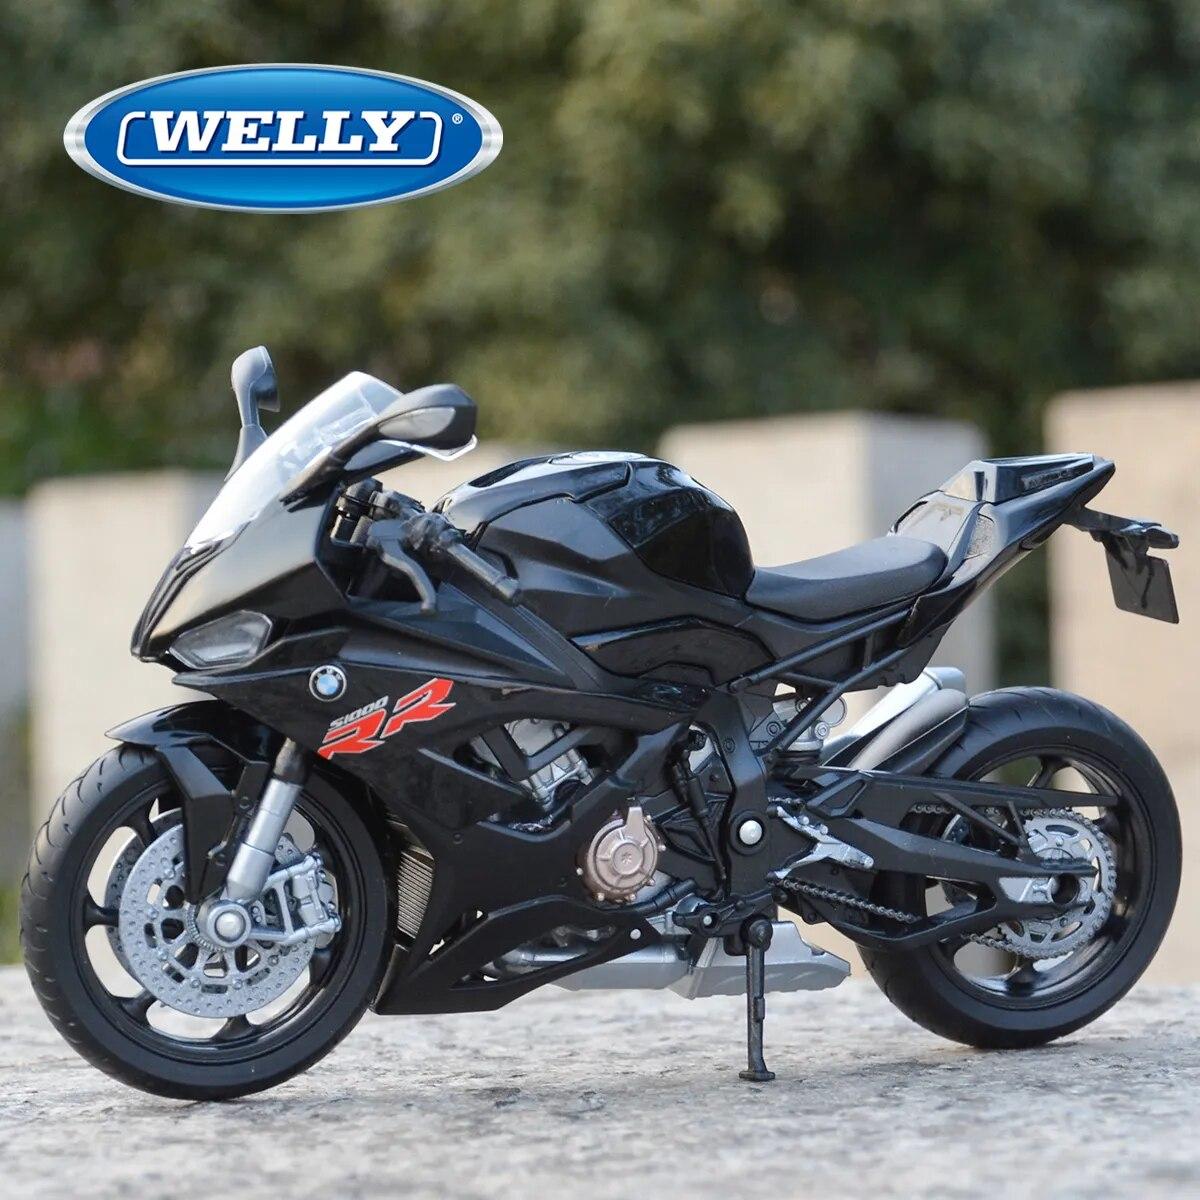 WELLY-1-12-BMW-S1000RR-Alloy-Sports-Motorcycle-Model-Diecast-Metal-Toy-Street-Racing-Motorcycle-Model.jpg